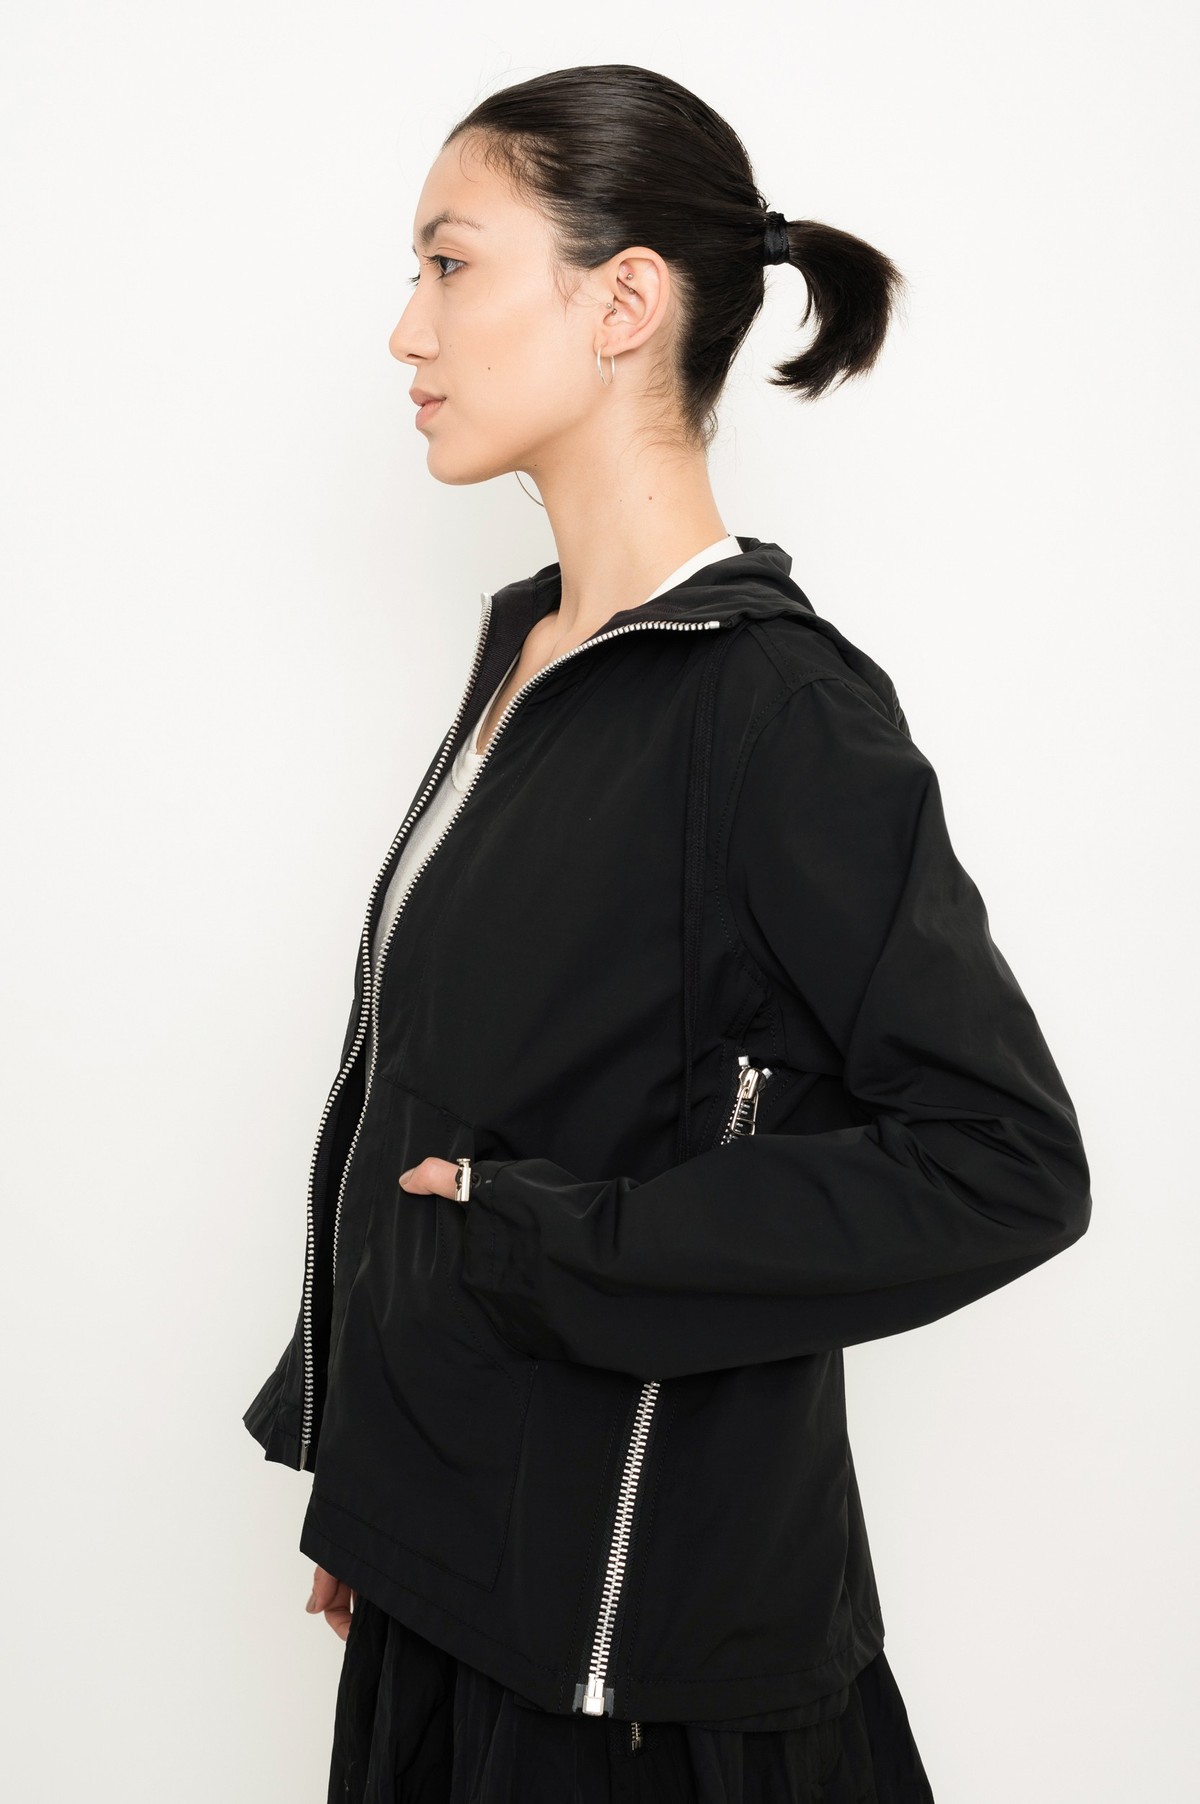 jaqueta esportiva versátil com ziperes | tech fabric versatile jacket with zippers 